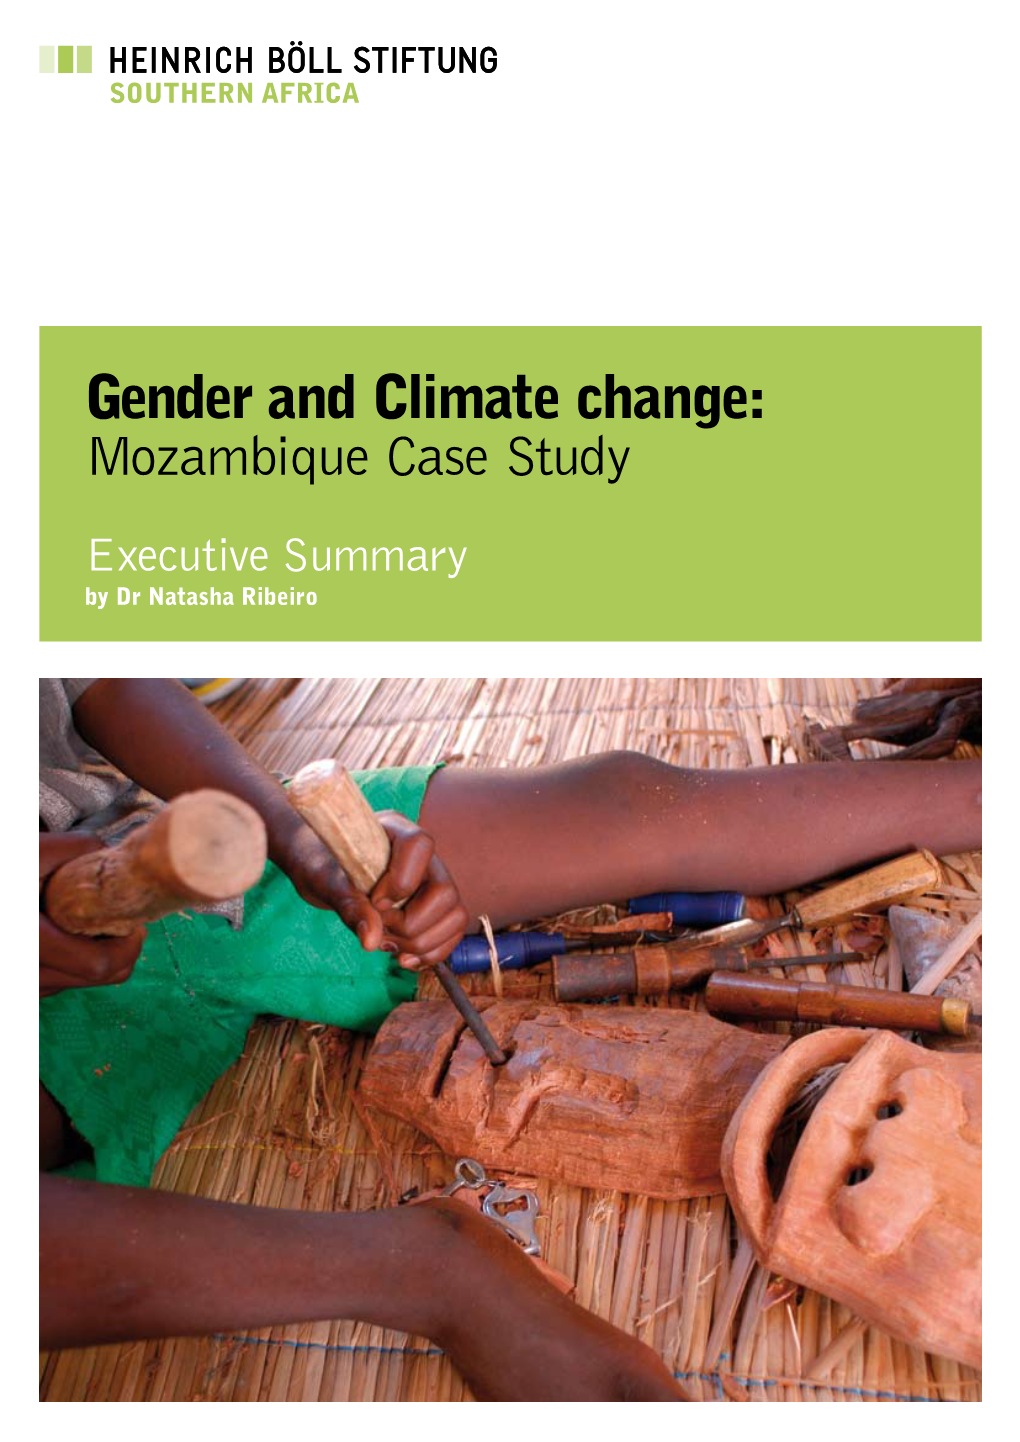 Gender and Climate Change: Mozambique Case Study Executive Summary by Dr Natasha Ribeiro 1